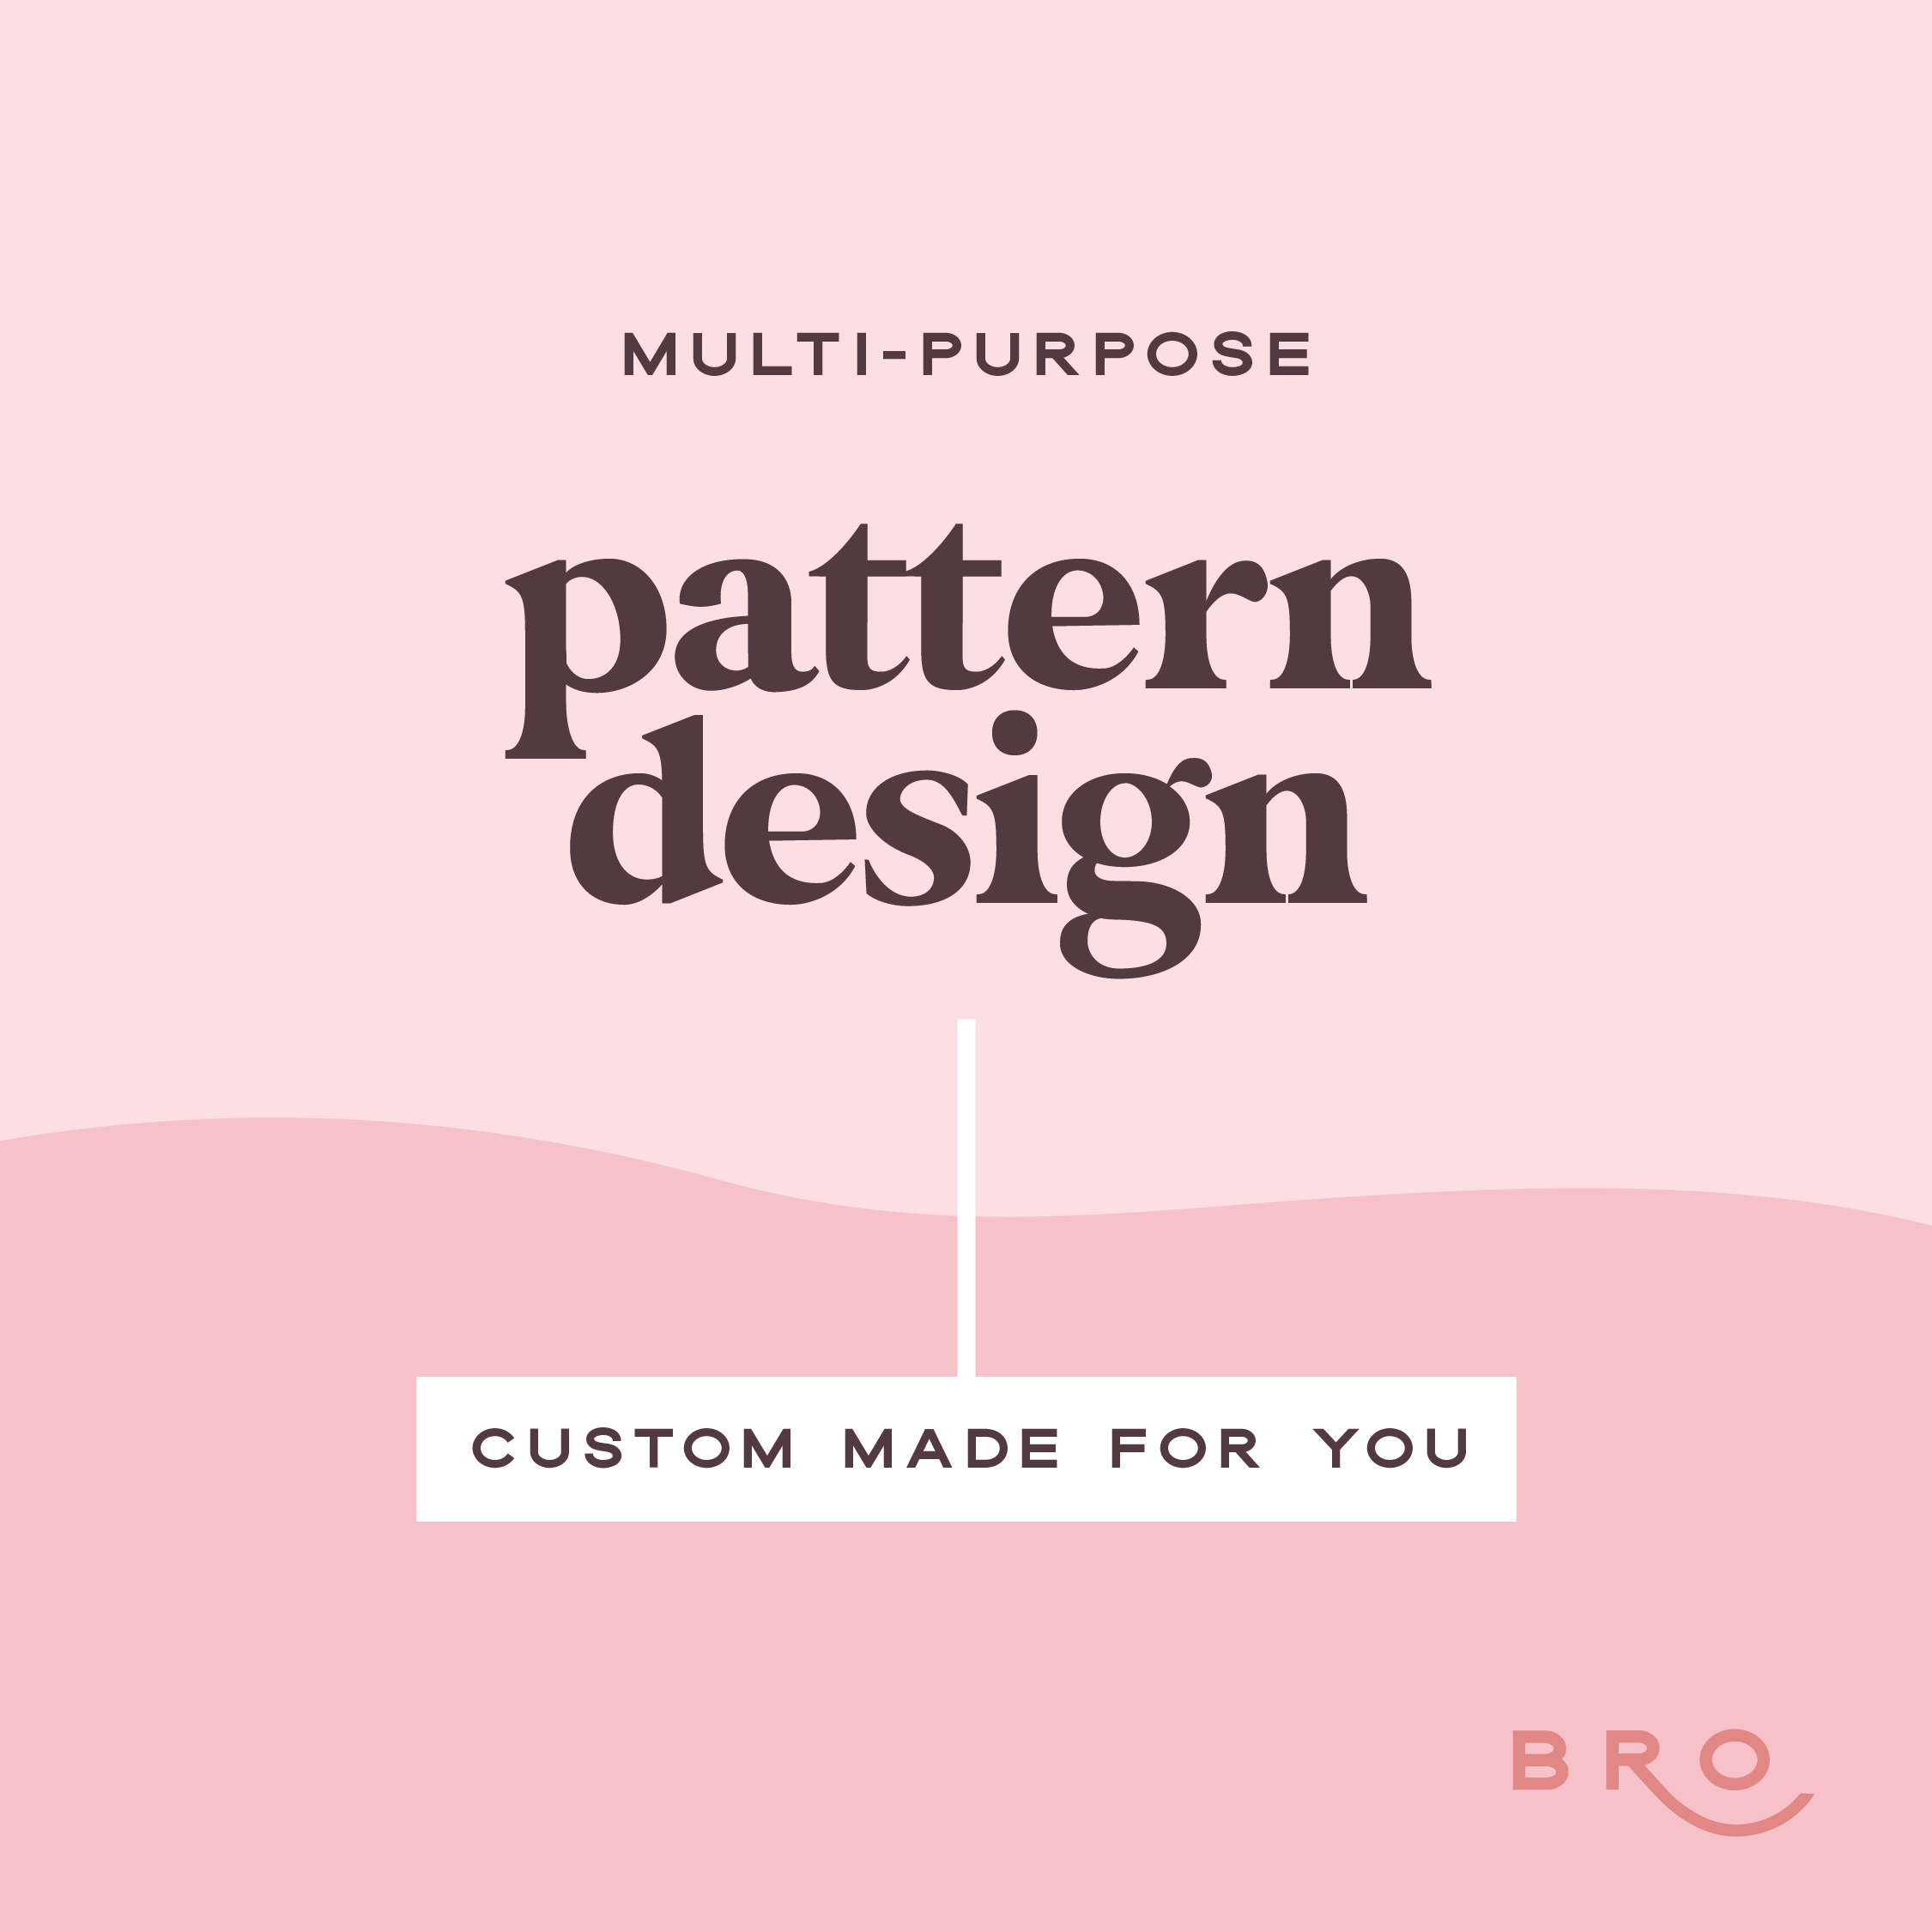 Seamless Pattern Design